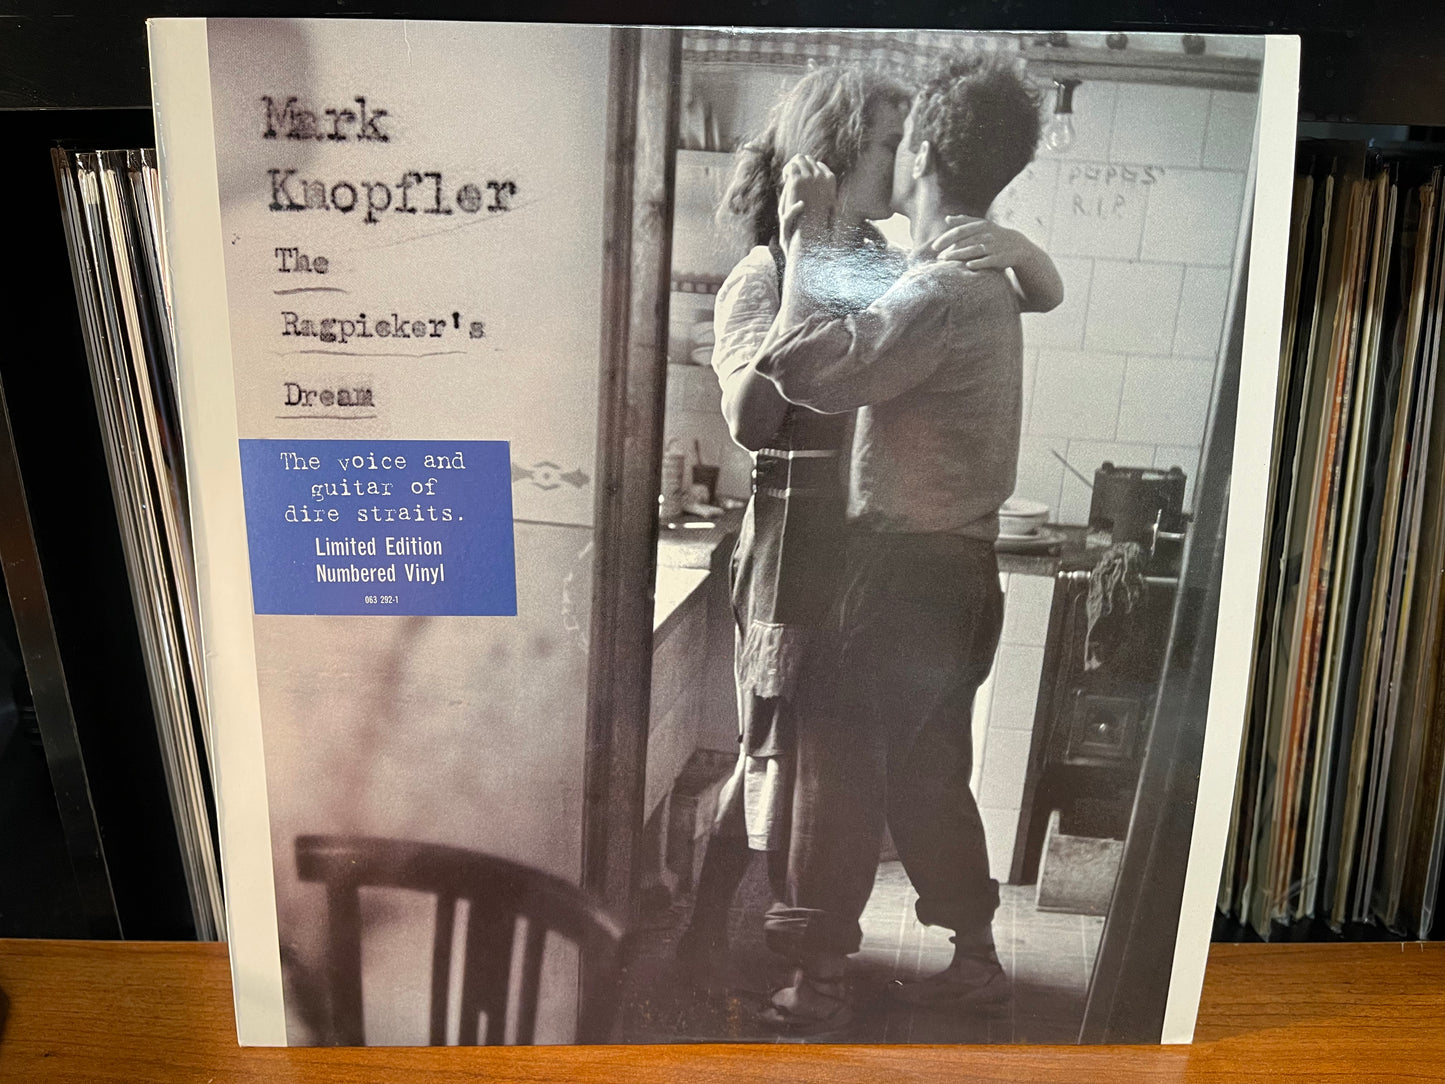 Mark Knopfler ‎– The Ragpicker's Dream (2002 European Press, Numbered)